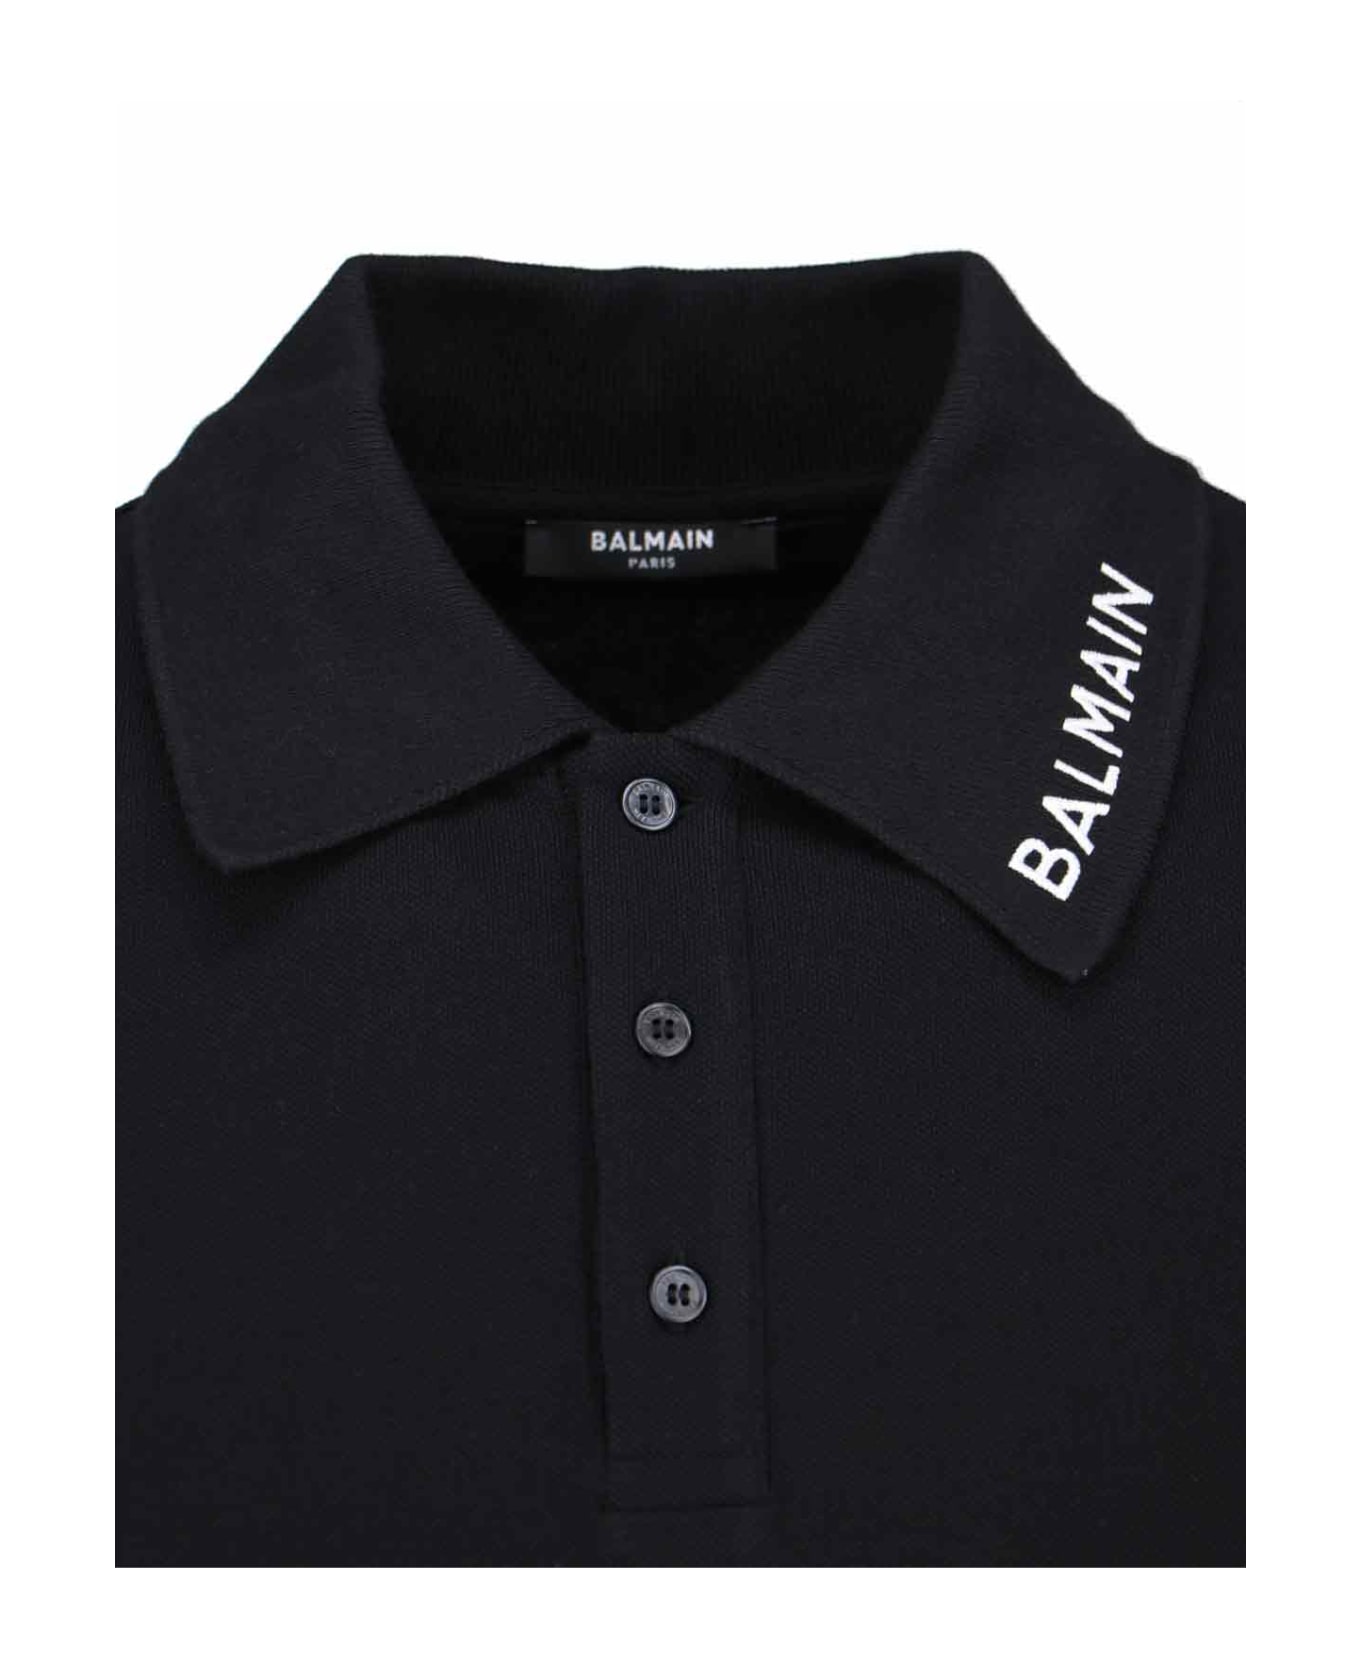 Balmain Logo Polo Shirt - Black   ポロシャツ